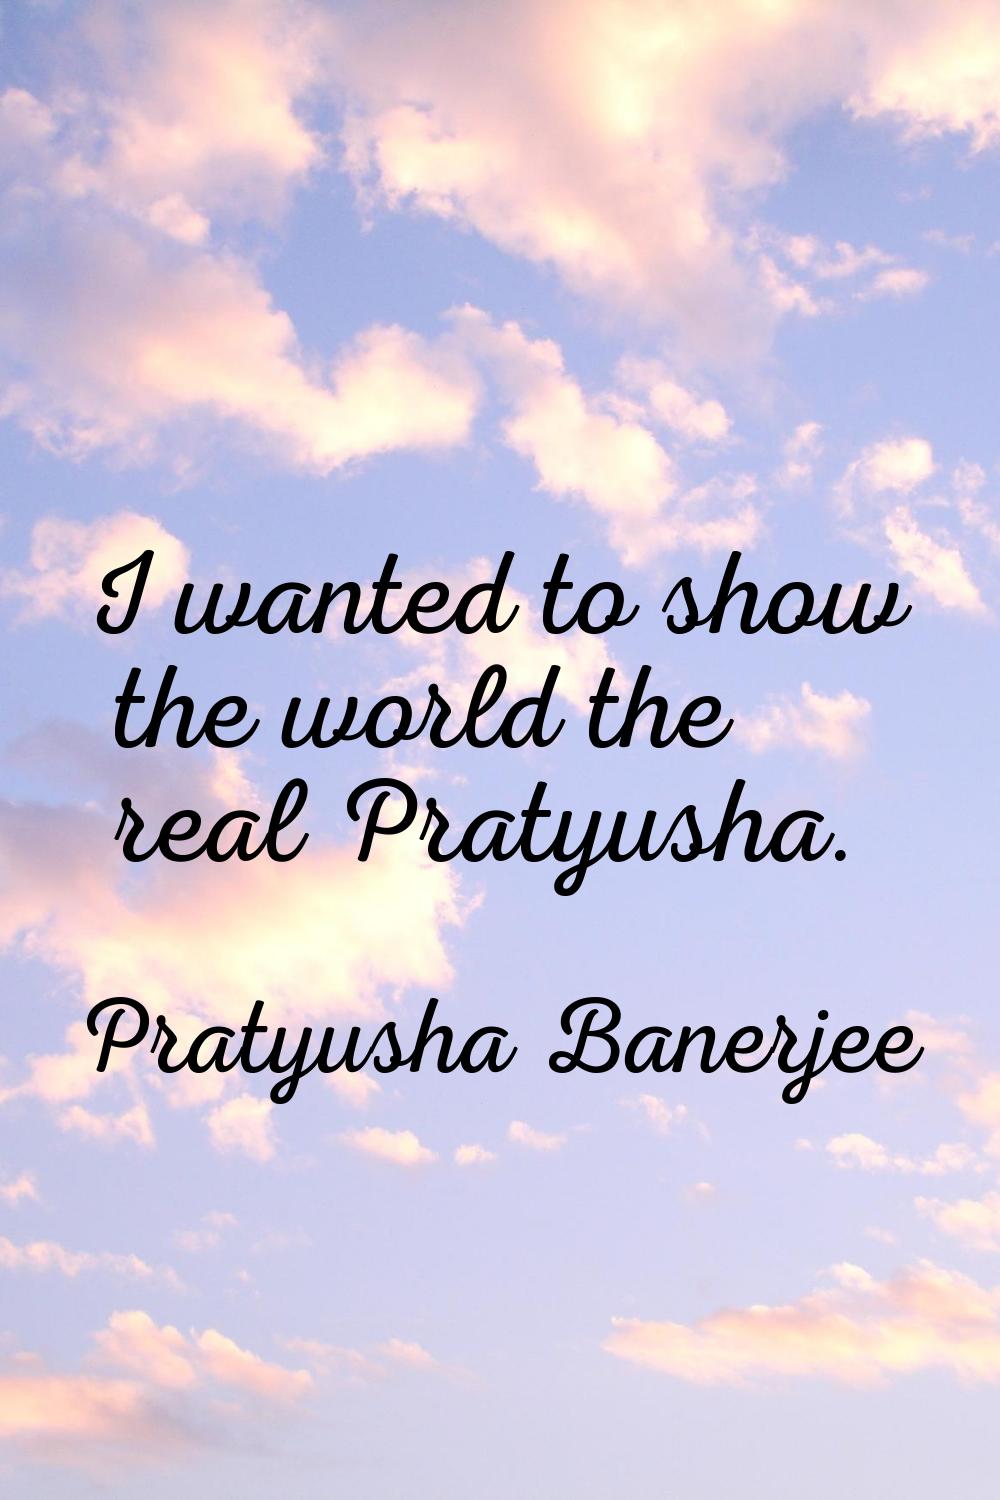 I wanted to show the world the real Pratyusha.